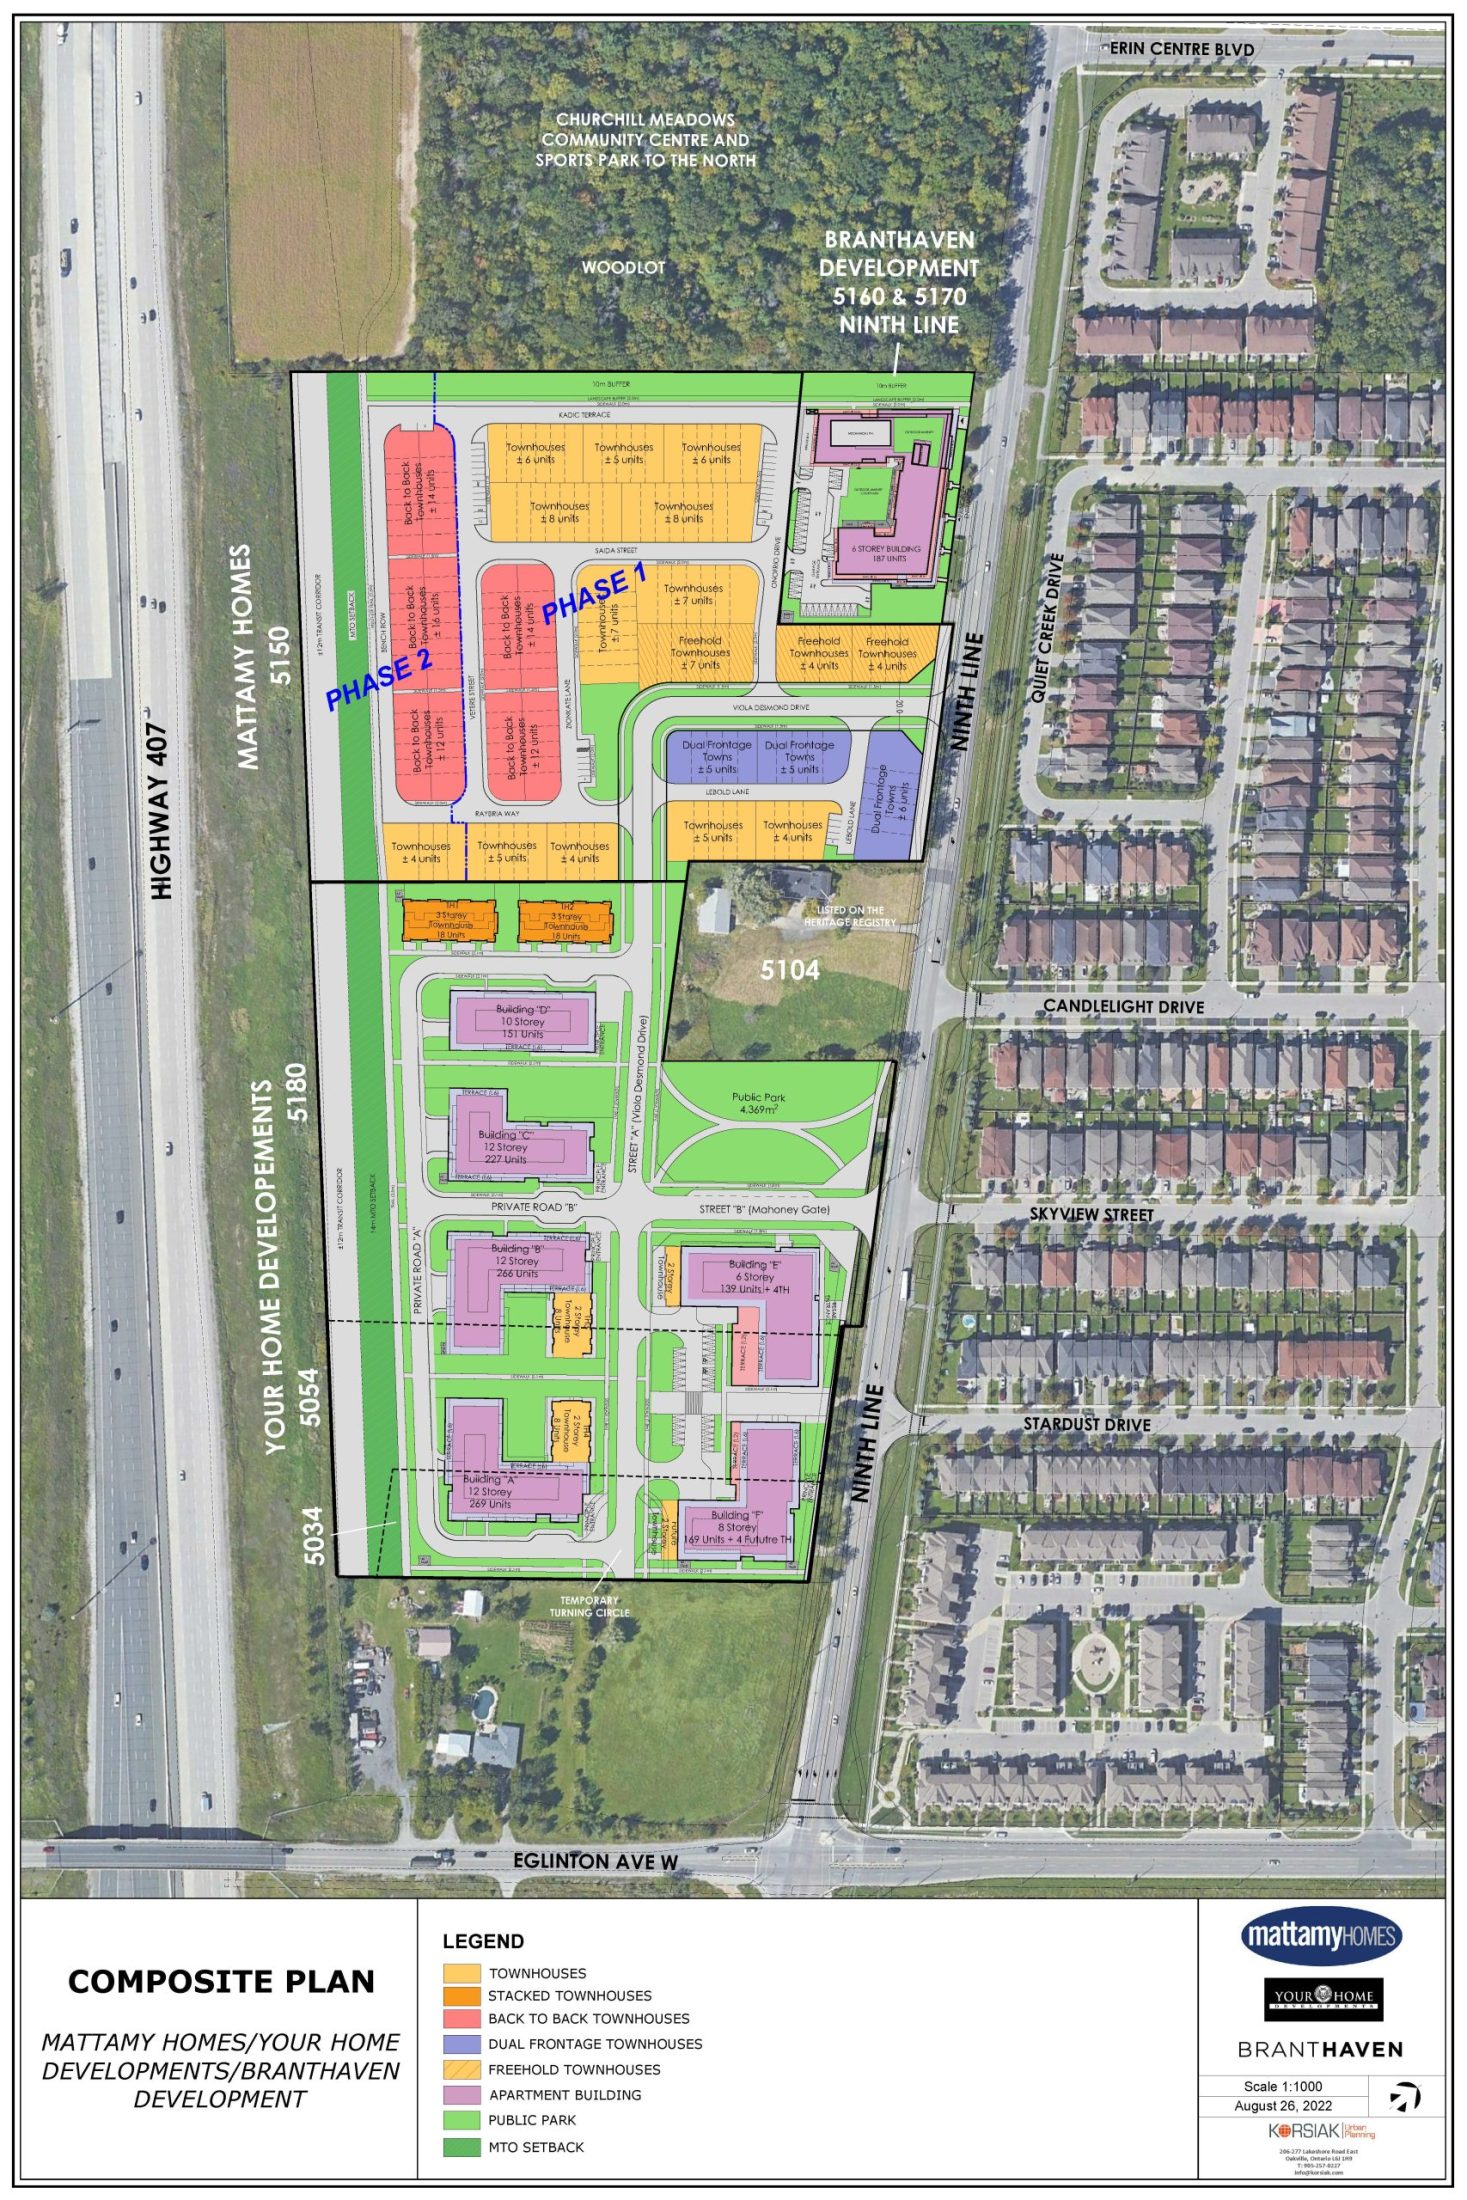 Korsiak Urban Planning - Mississauga Portfolio - Ninth Line, Greenfield Development - Mississauga, Ontario